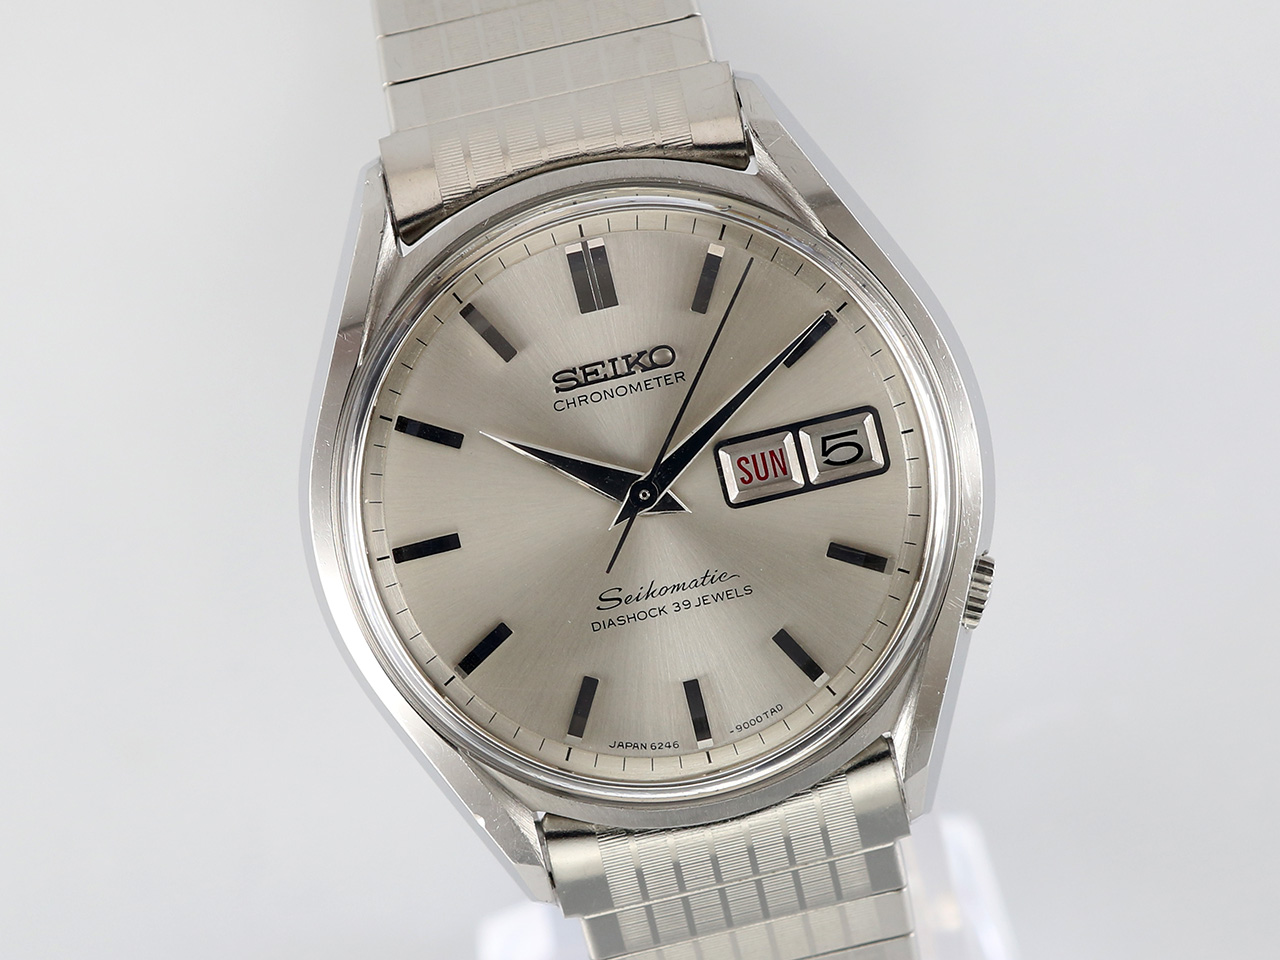 WITHDRAWN - 1966 Seikomatic Chronometer Ref. 6246-9000 - SS case 